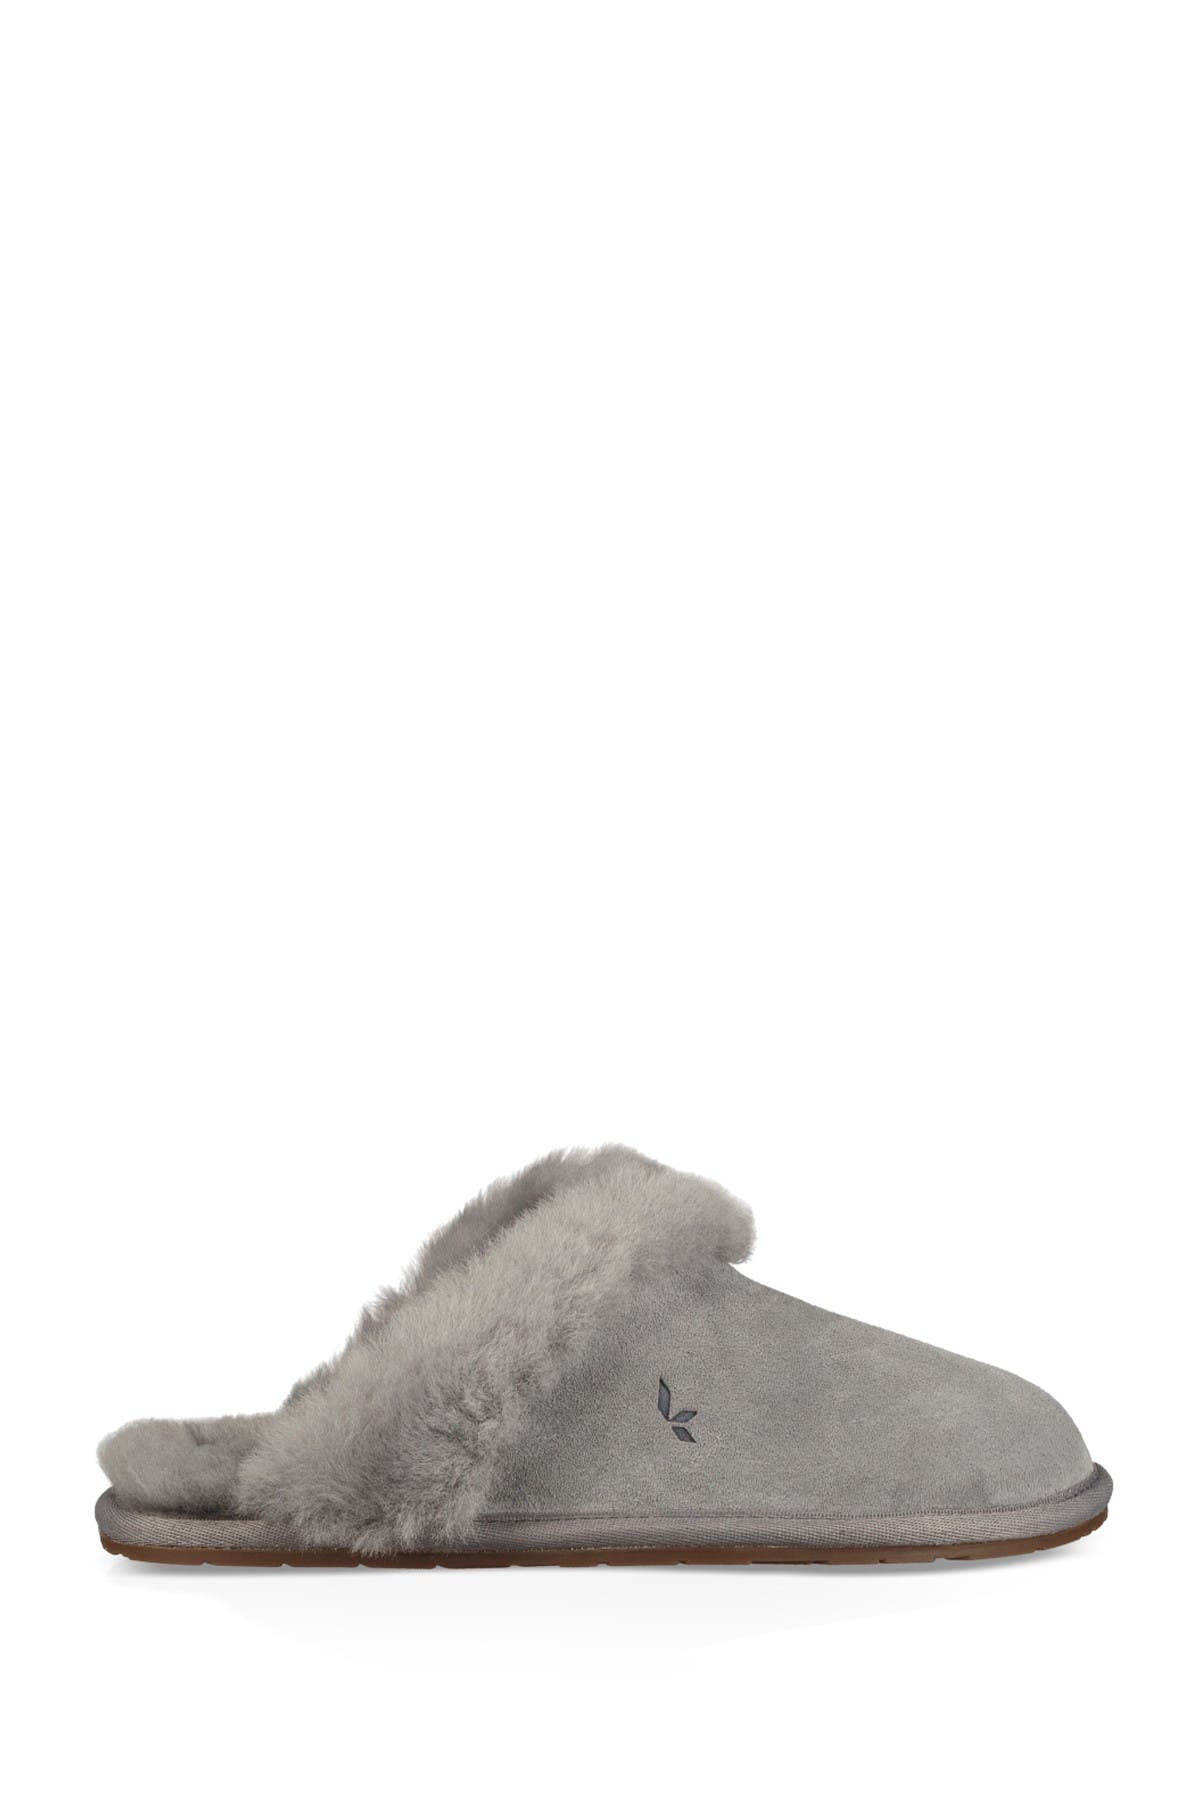 koolaburra by ugg milo women's scuff slippers